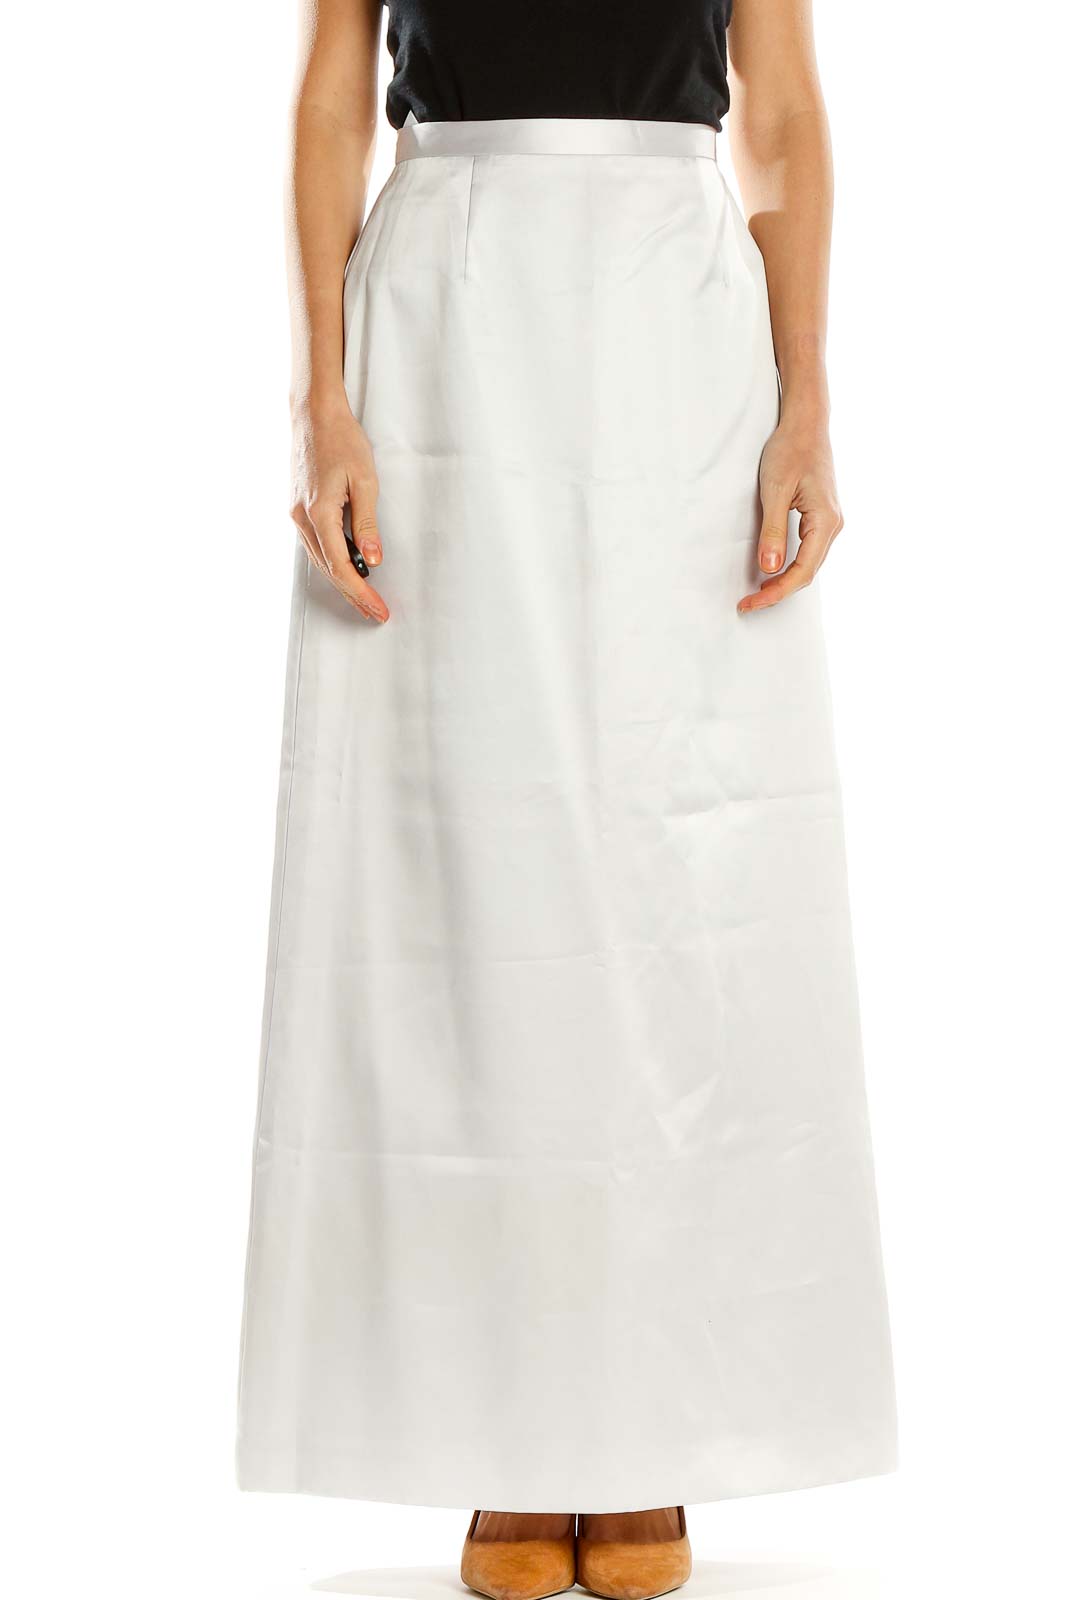 White Retro A-Line Skirt Front